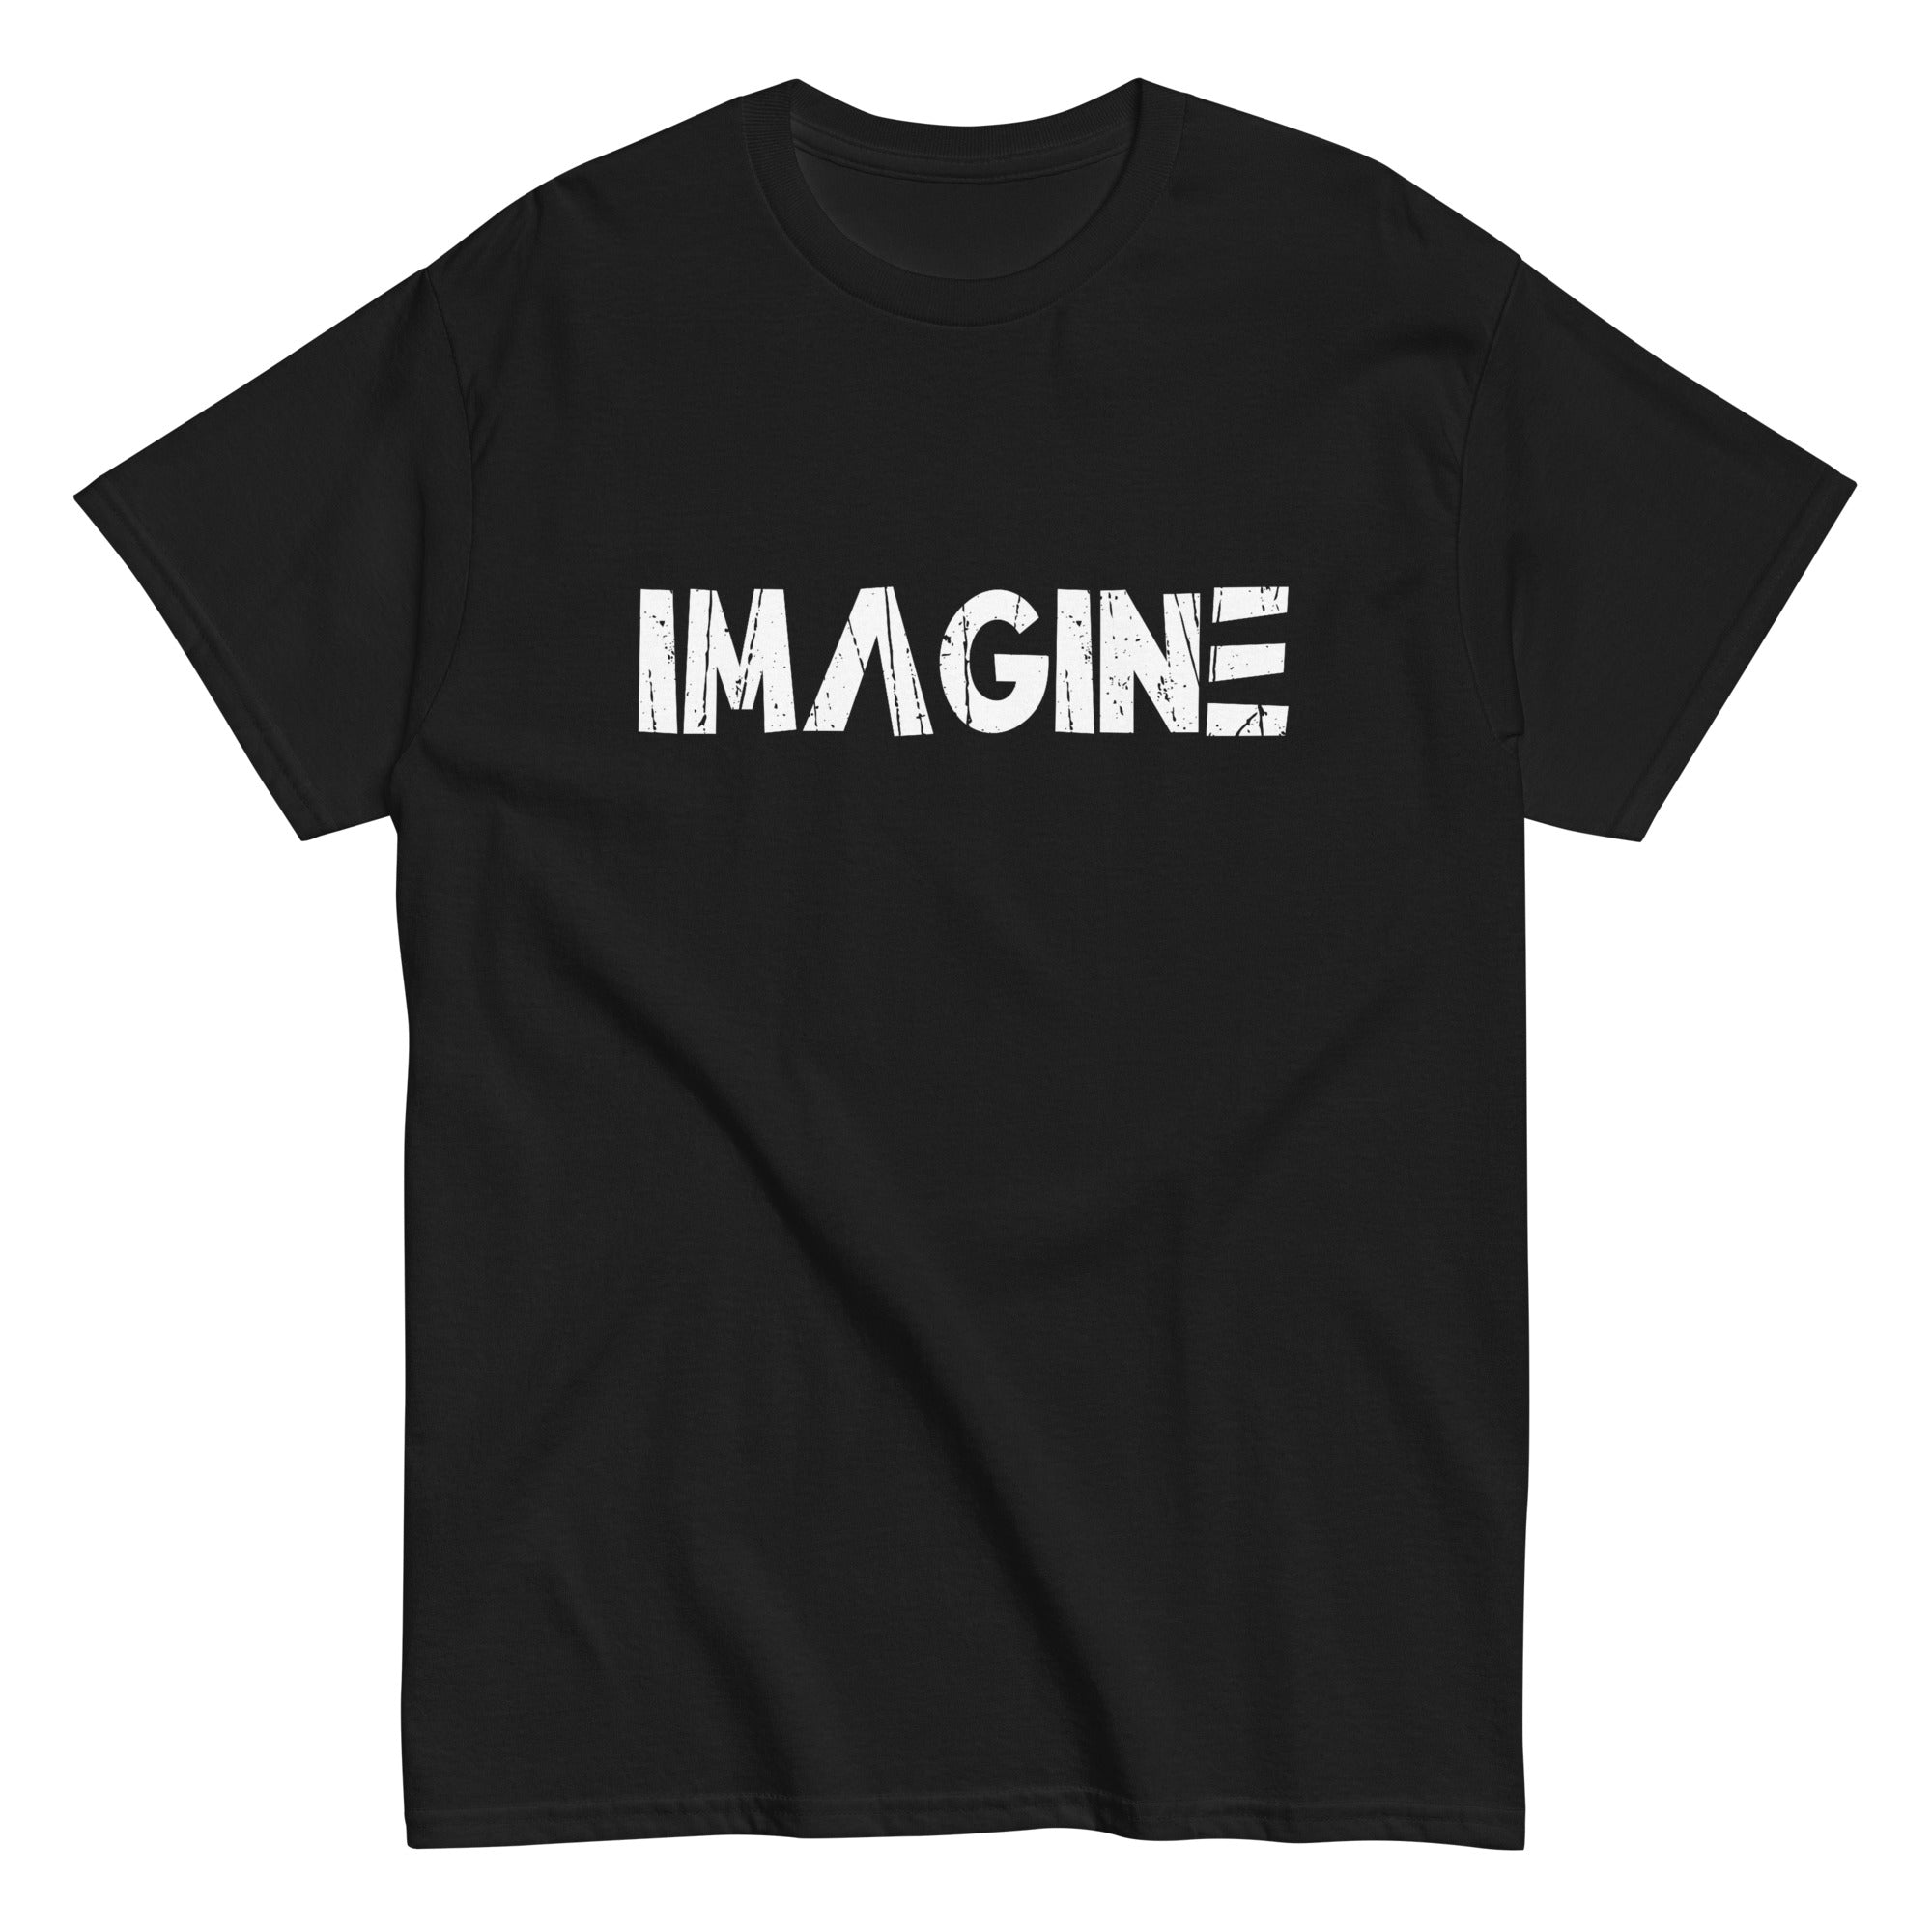 IMAGINE - Men's Classic T-Shirt